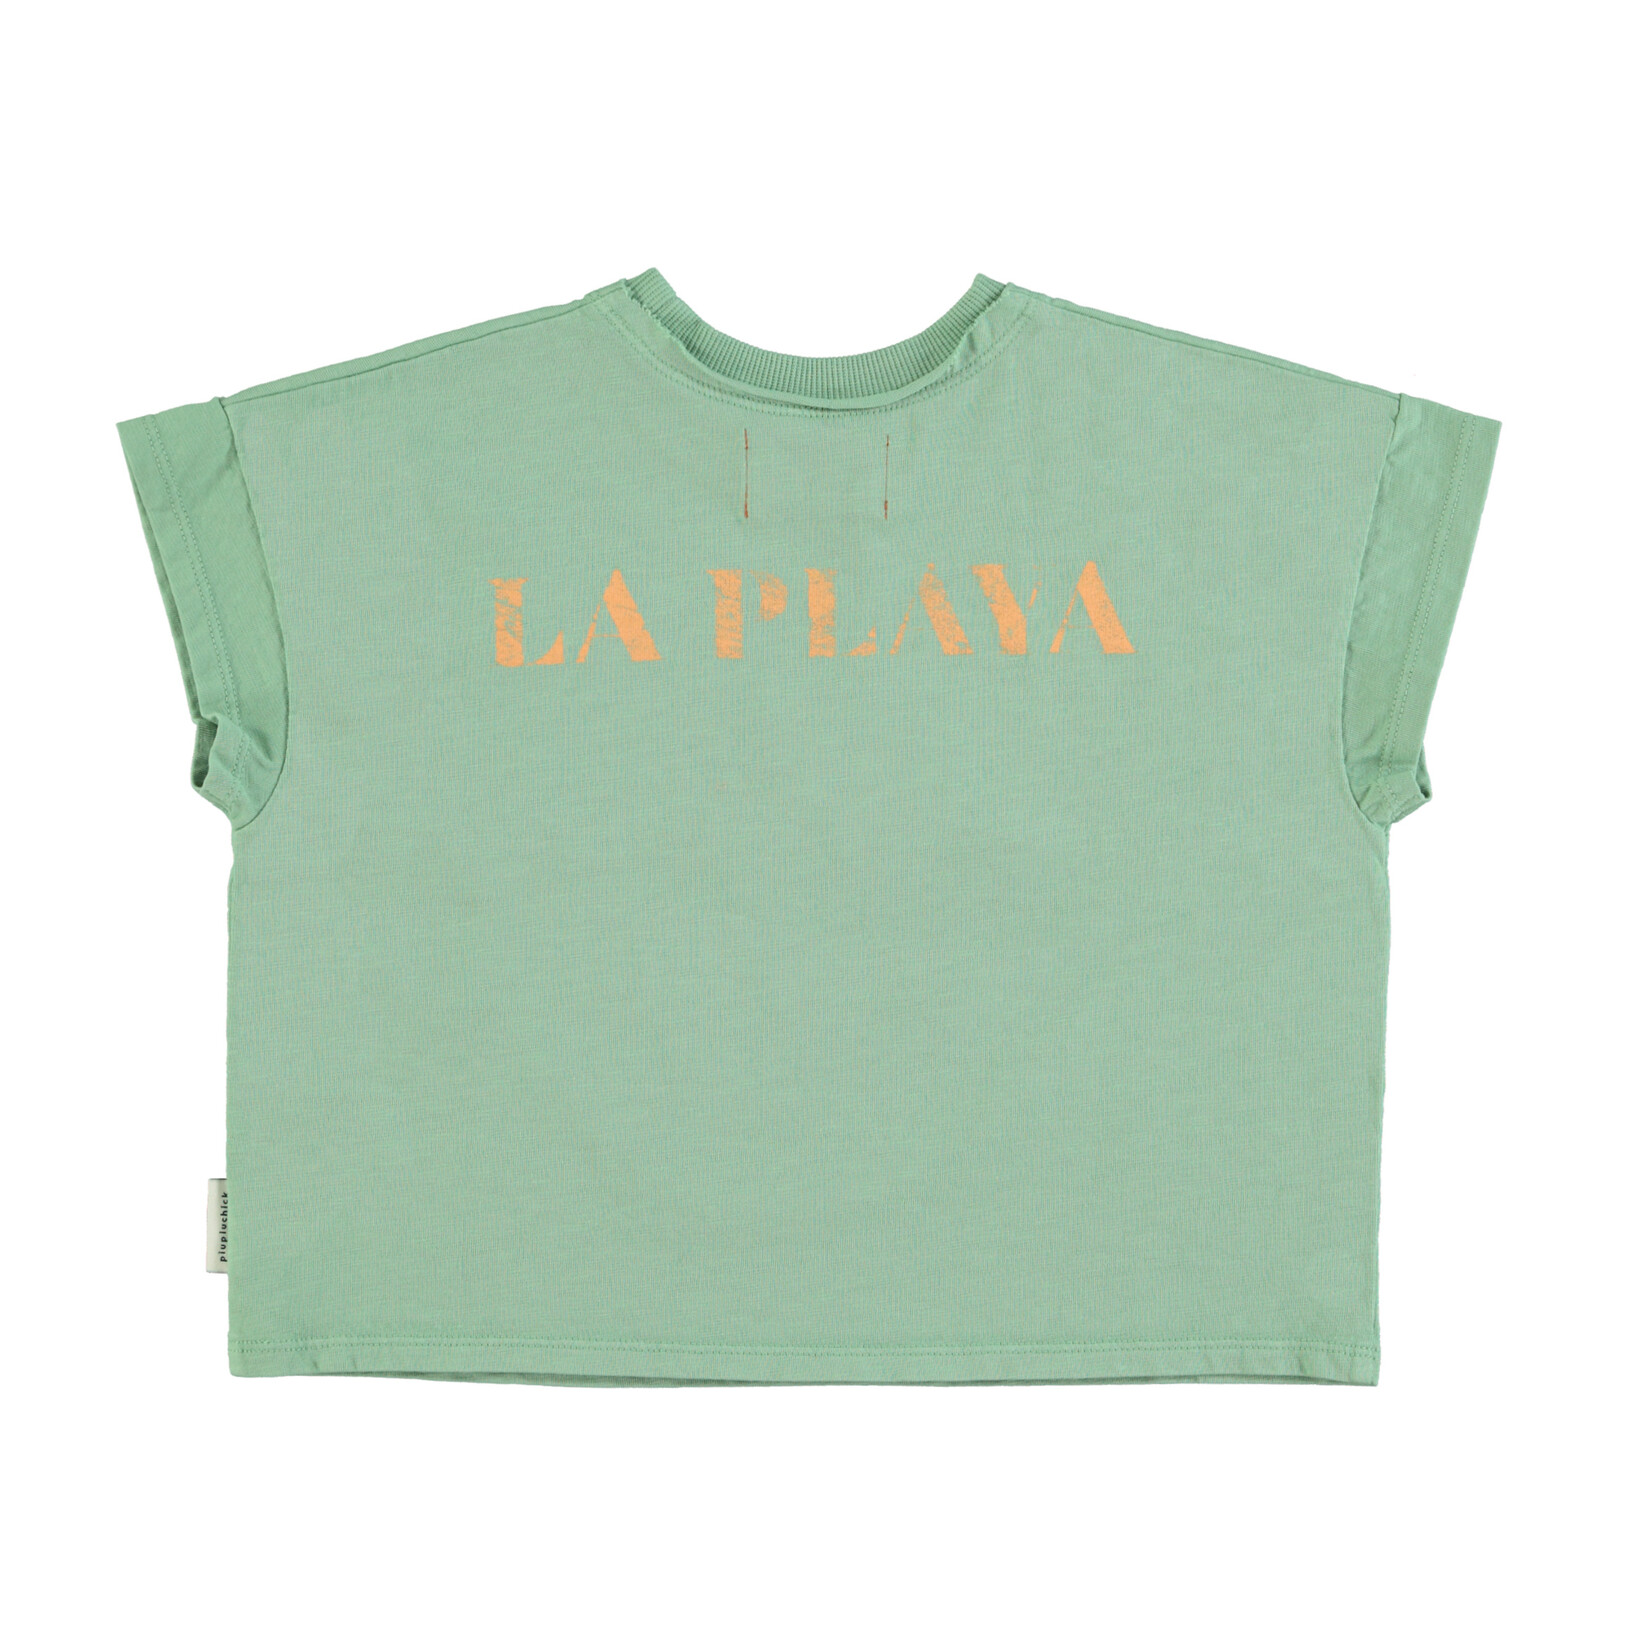 Piupiuchick t'shirt | green w/ multicolor circle print